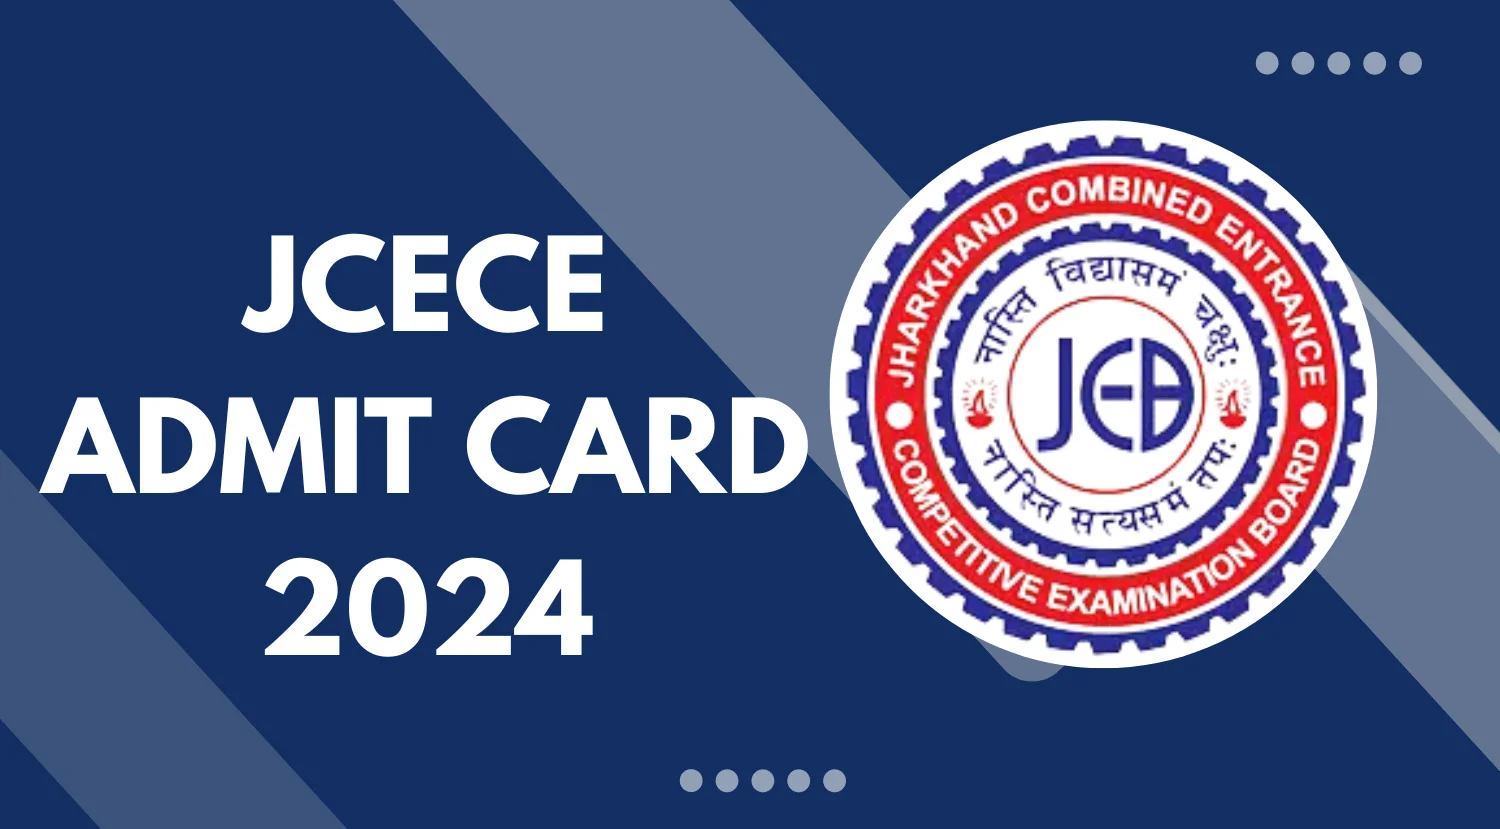 JCECE Admit Card 2024